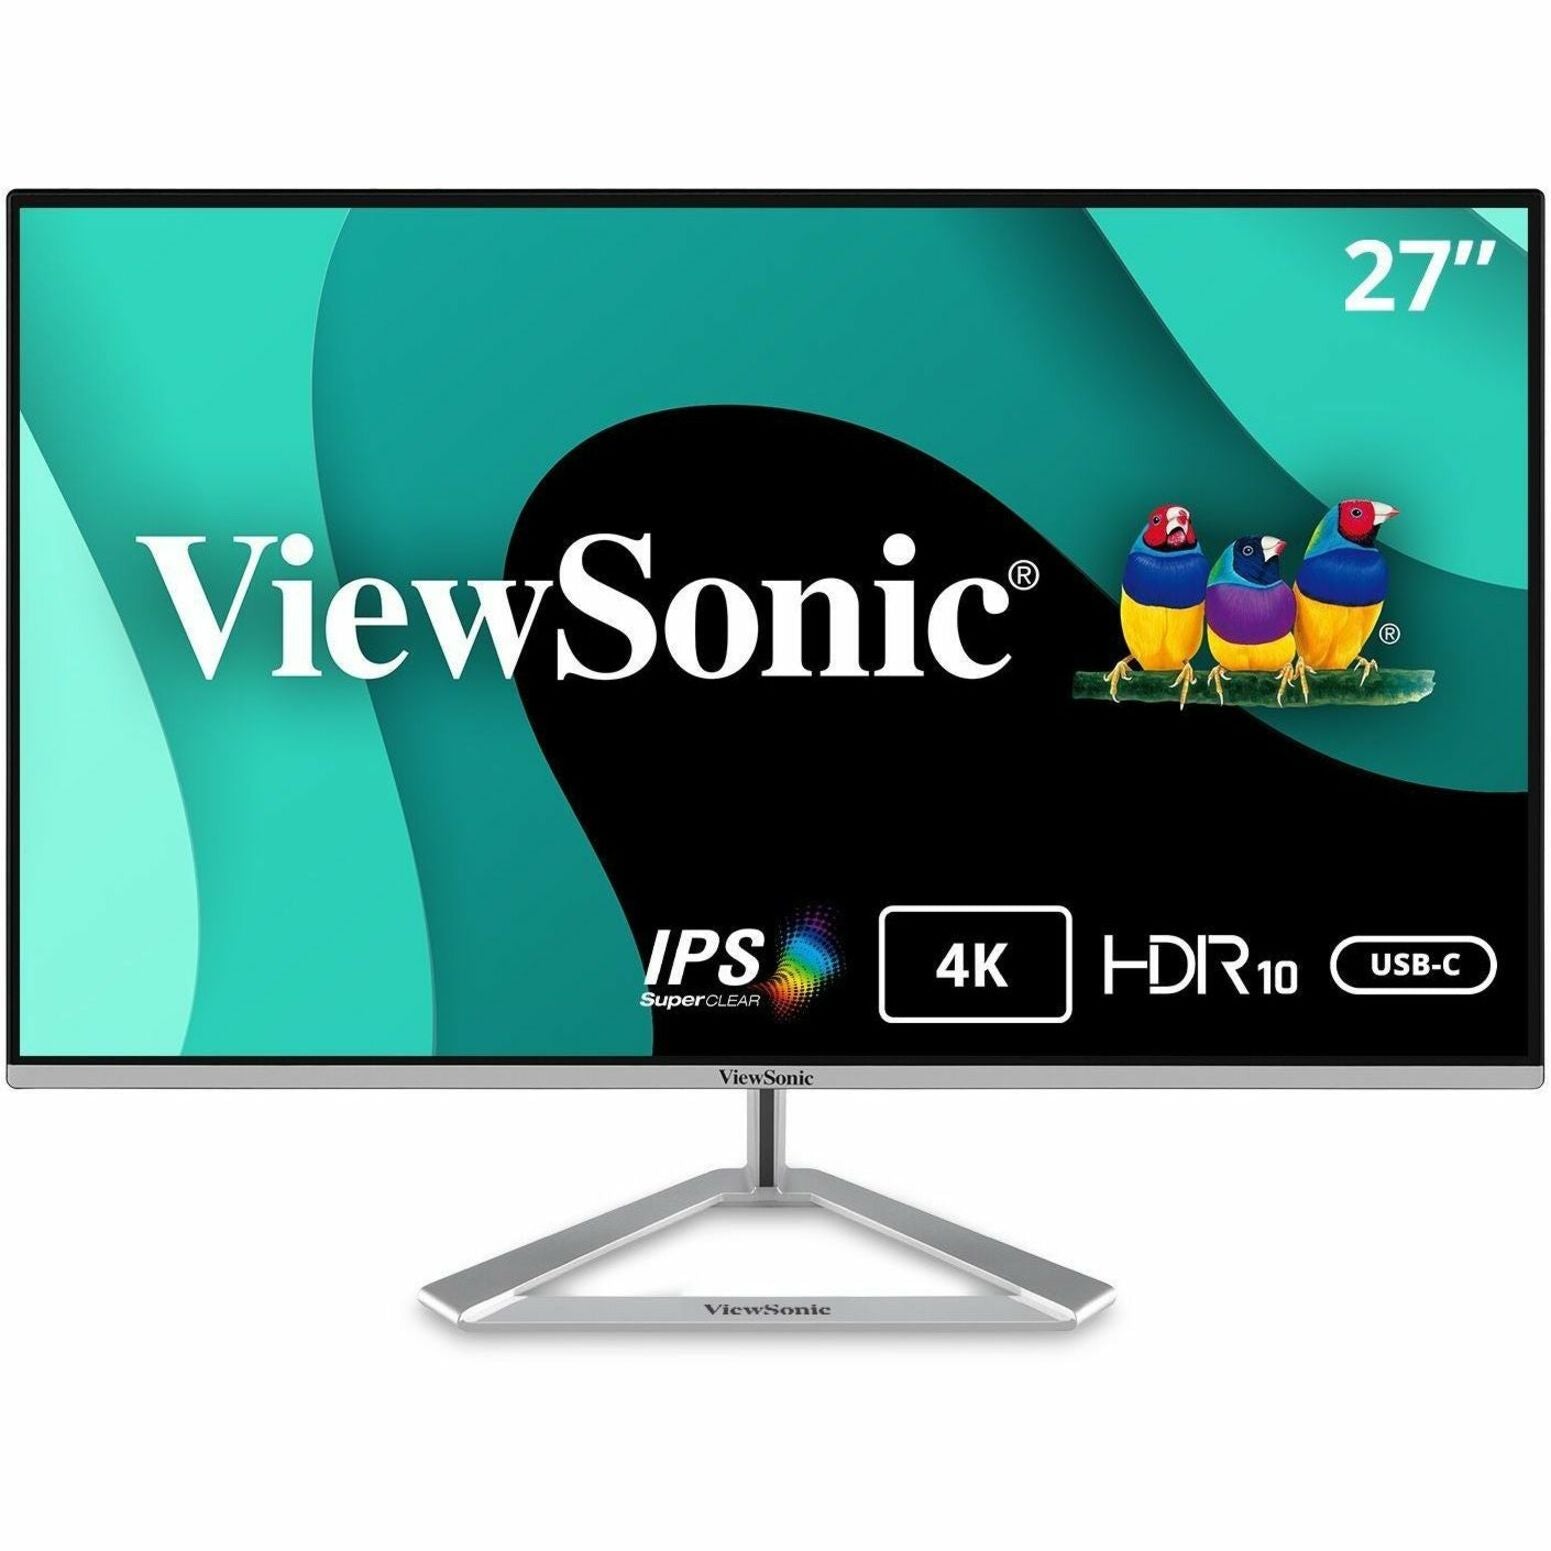 ViewSonic VX2776-4K-MHDU 27 4K UHD Thin-Bezel IPS Monitor with USB-C, HDMI, and DisplayPort, 1ms Response Time, 350 Nit Brightness, 1.07 Billion Colors